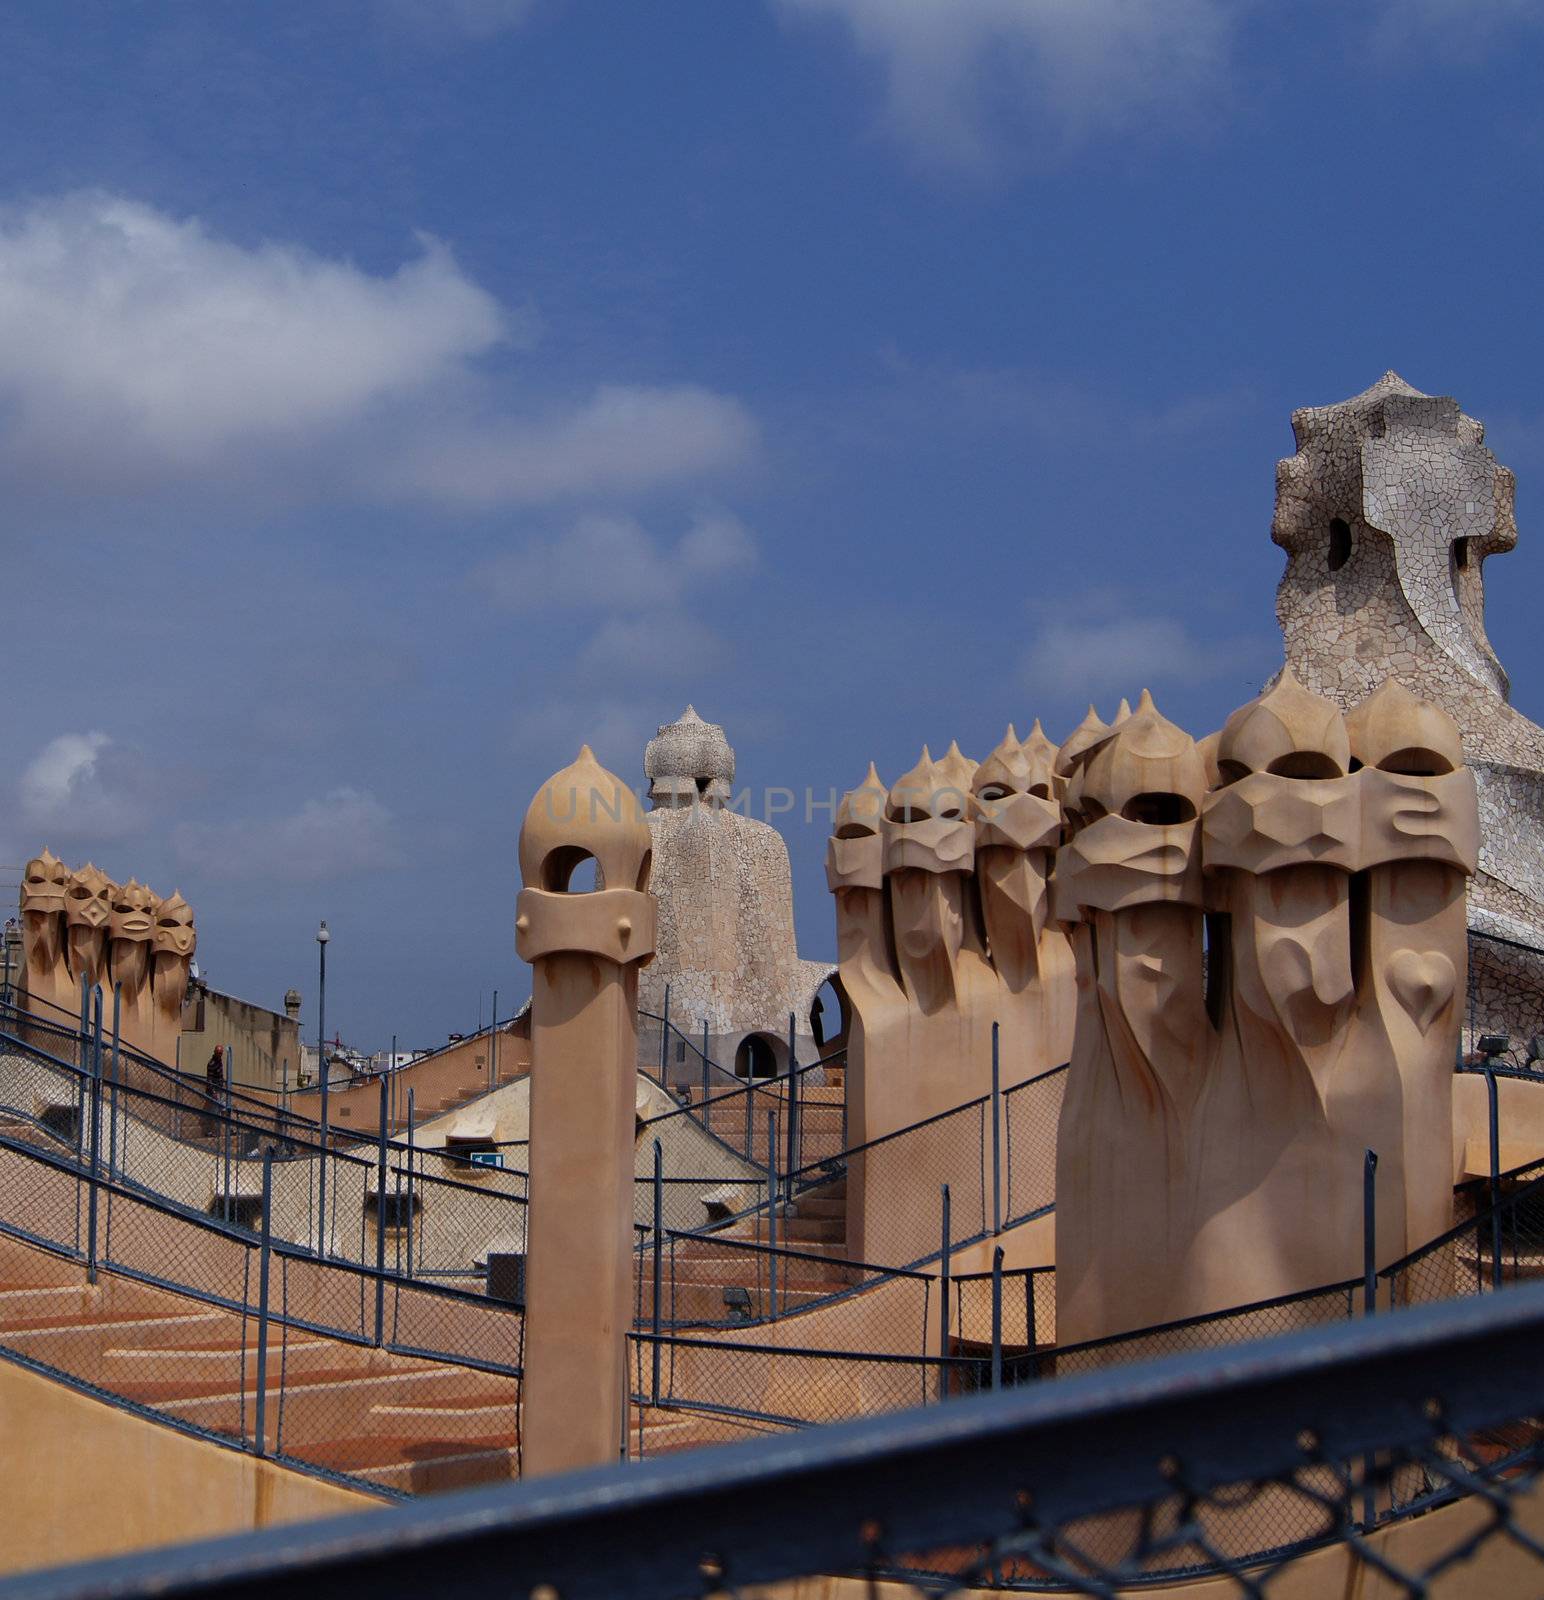 Roof of Casa Mila in Barcelona, Spain          